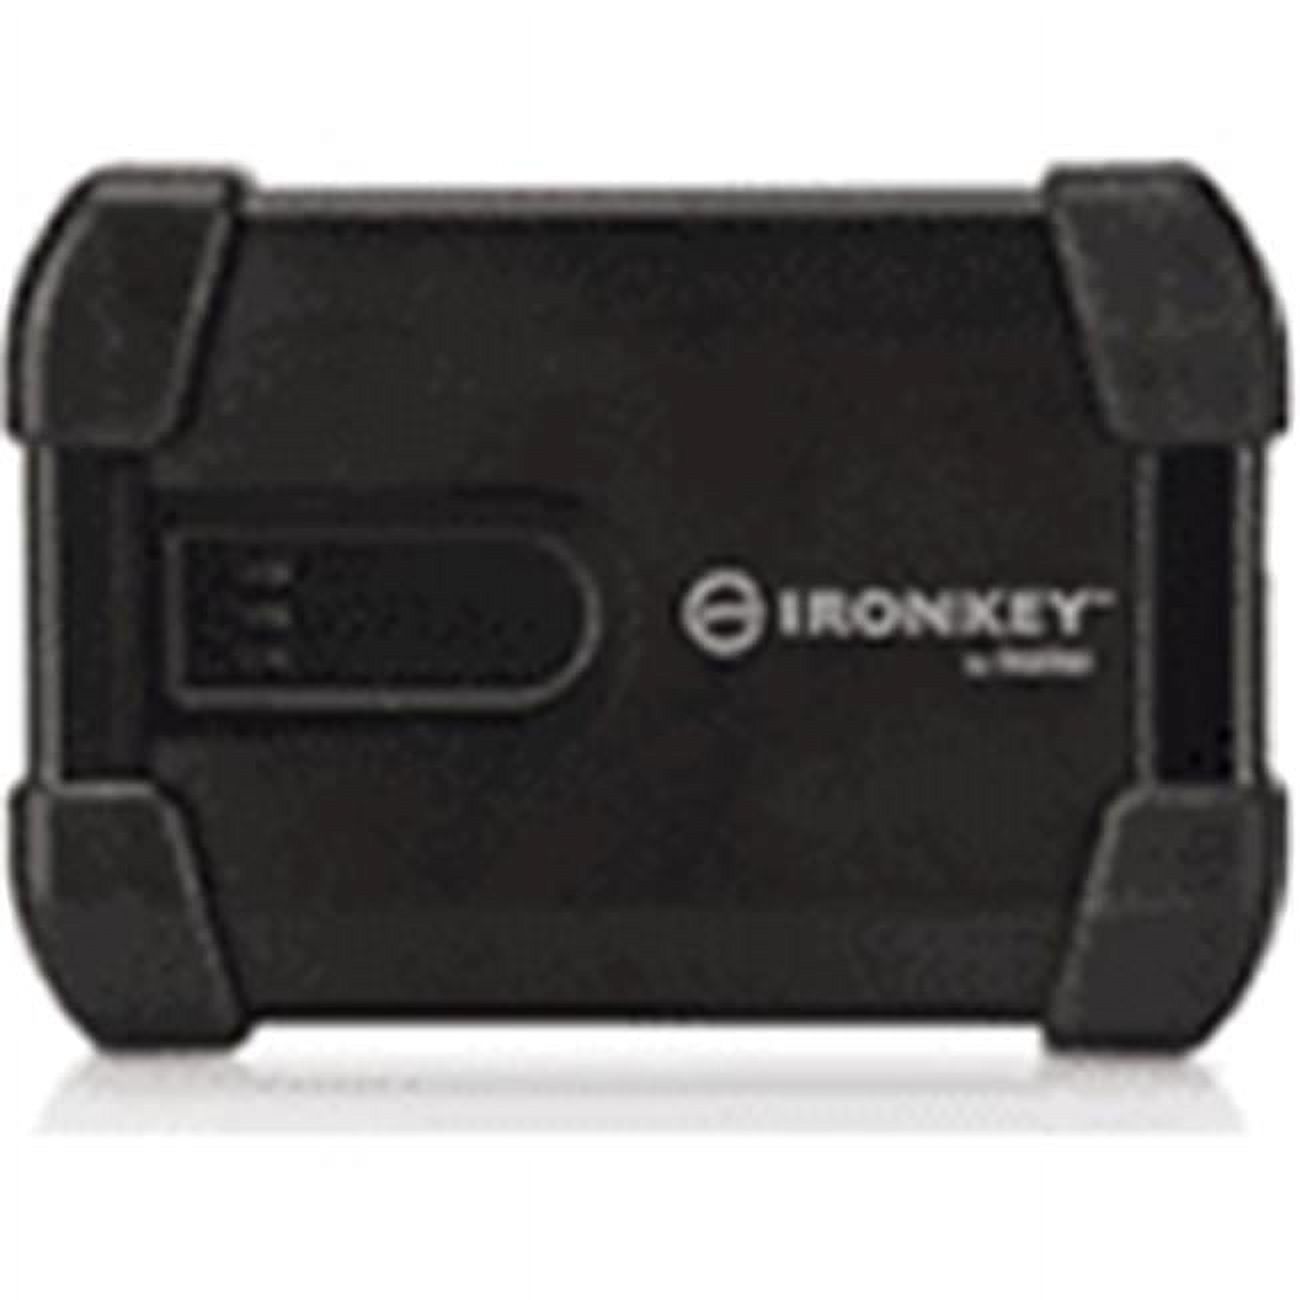 IronKey 500 GB Hard Drive, 2.5" External - image 1 of 6